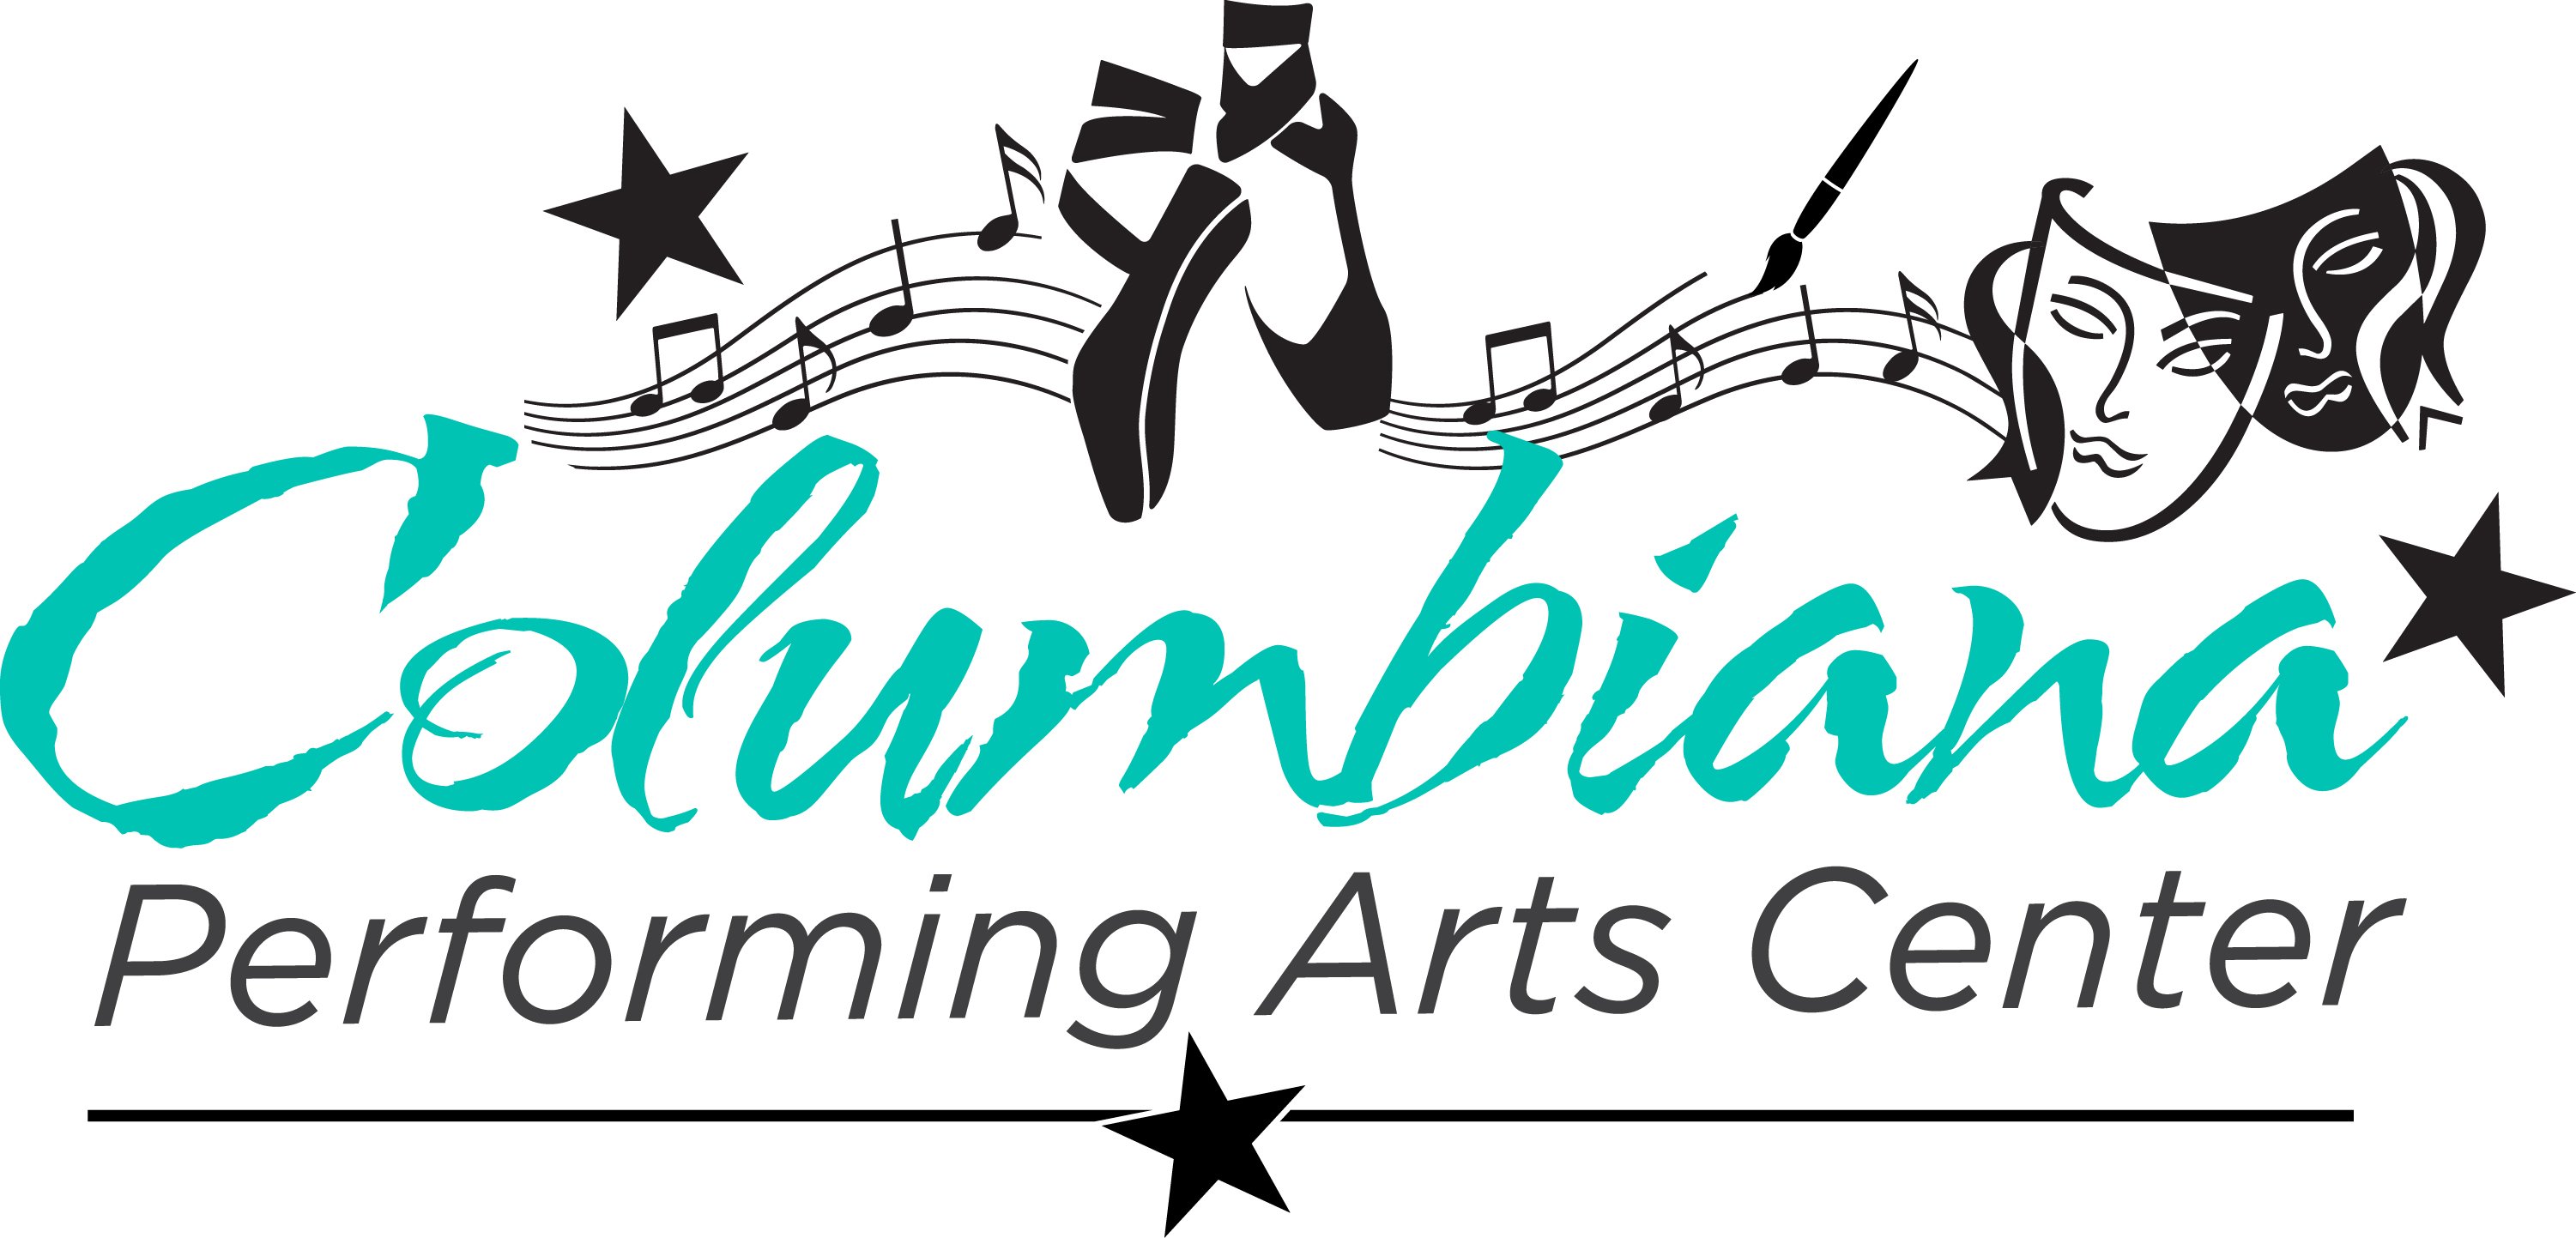 Columbiana Performing Arts Center logo